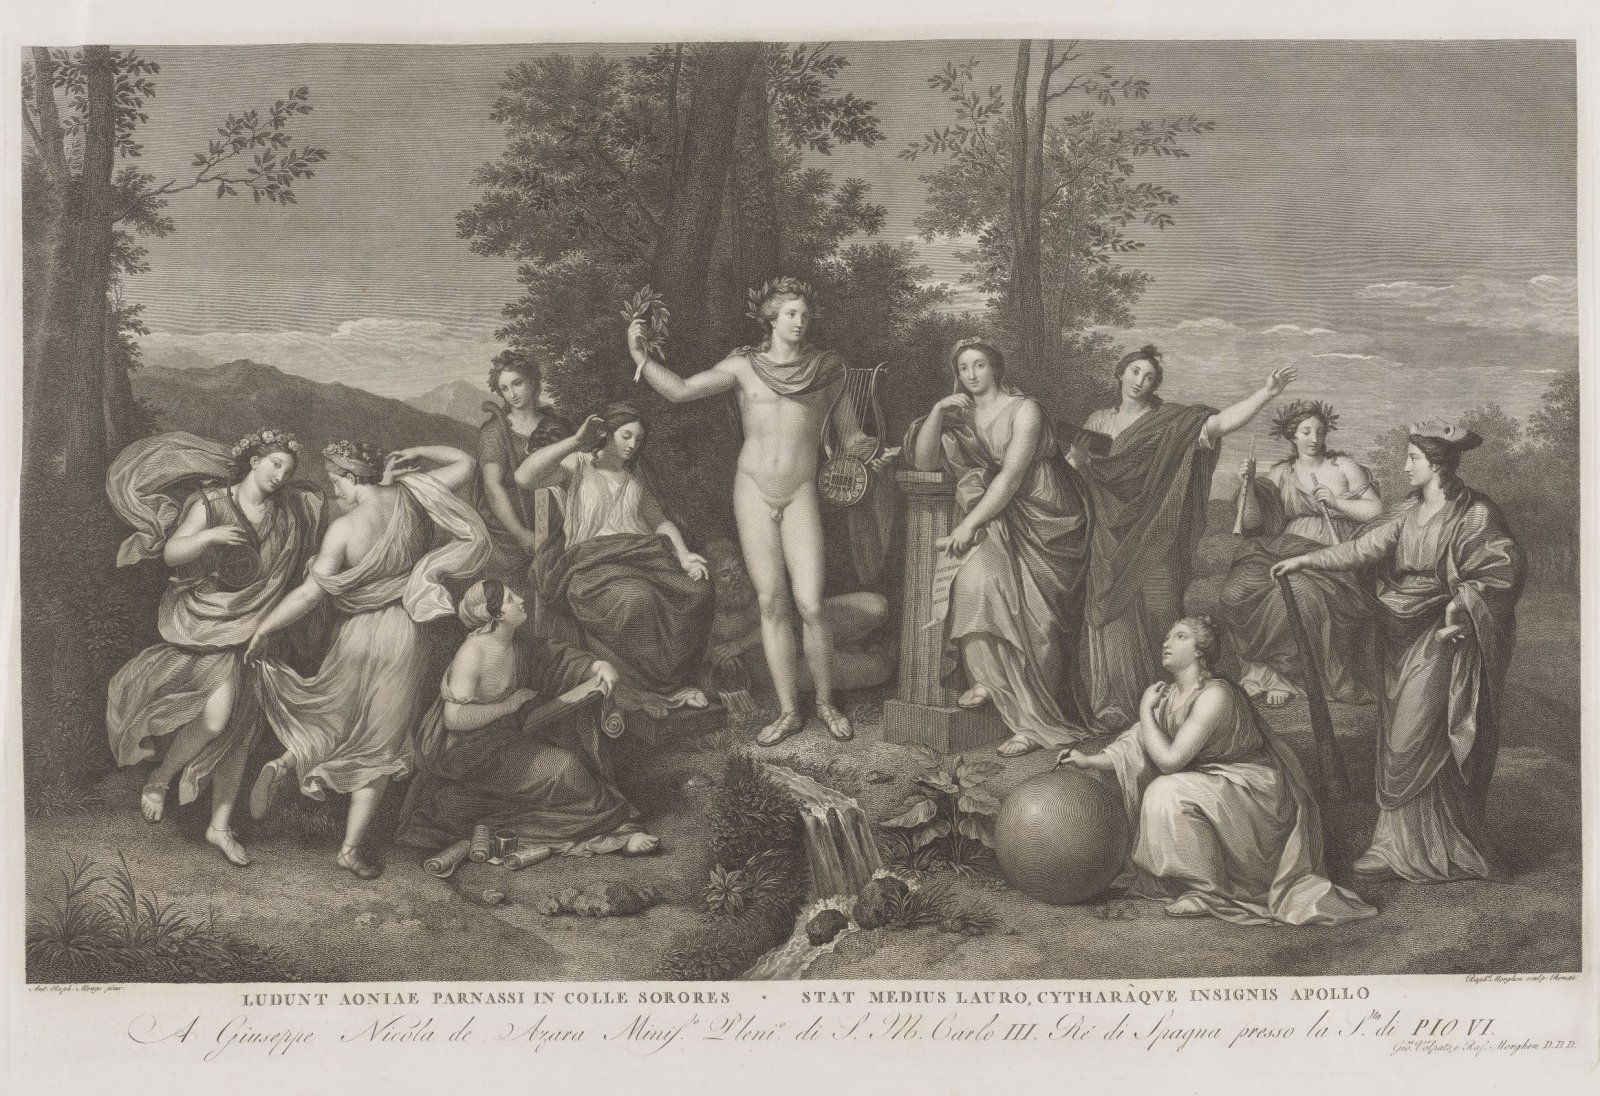 Rafaello Morghen, Apollo and Muses, 1784, monochromatic print, collection of the Polish National Library.